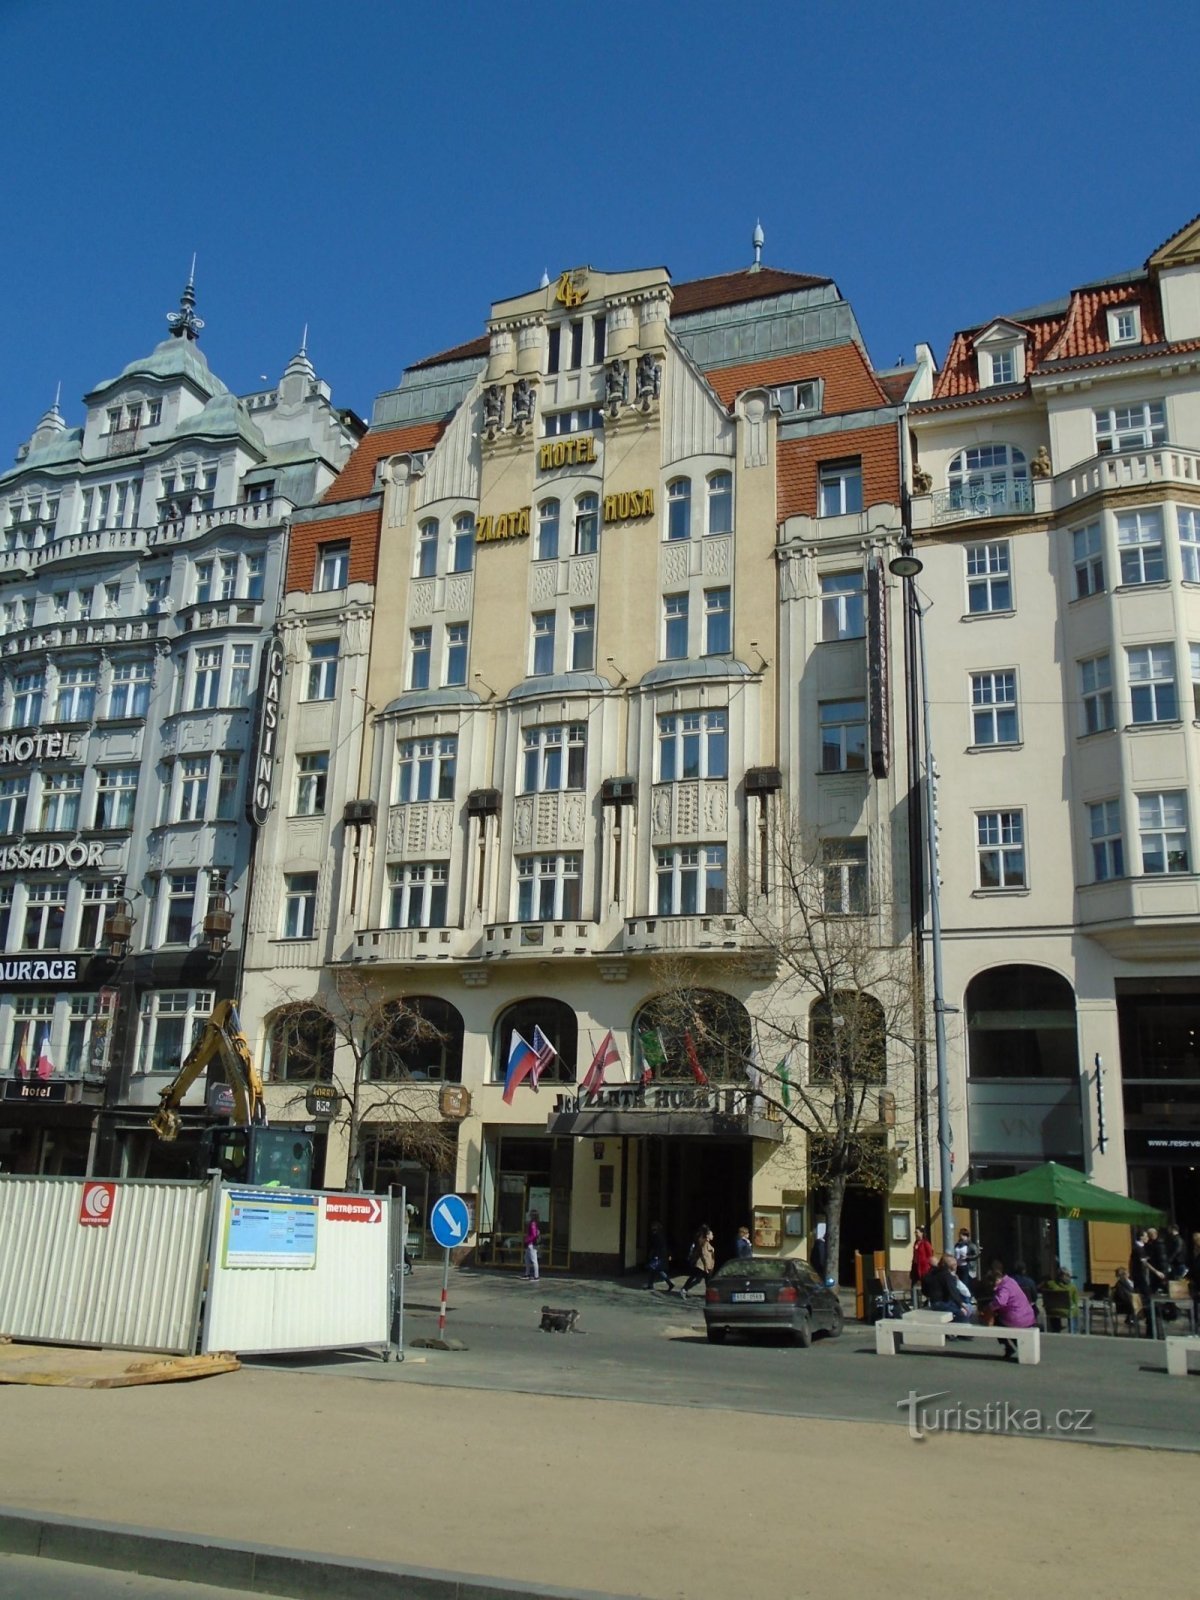 Hotel Zlatá husa (Prag, 1.4.2019. April XNUMX)